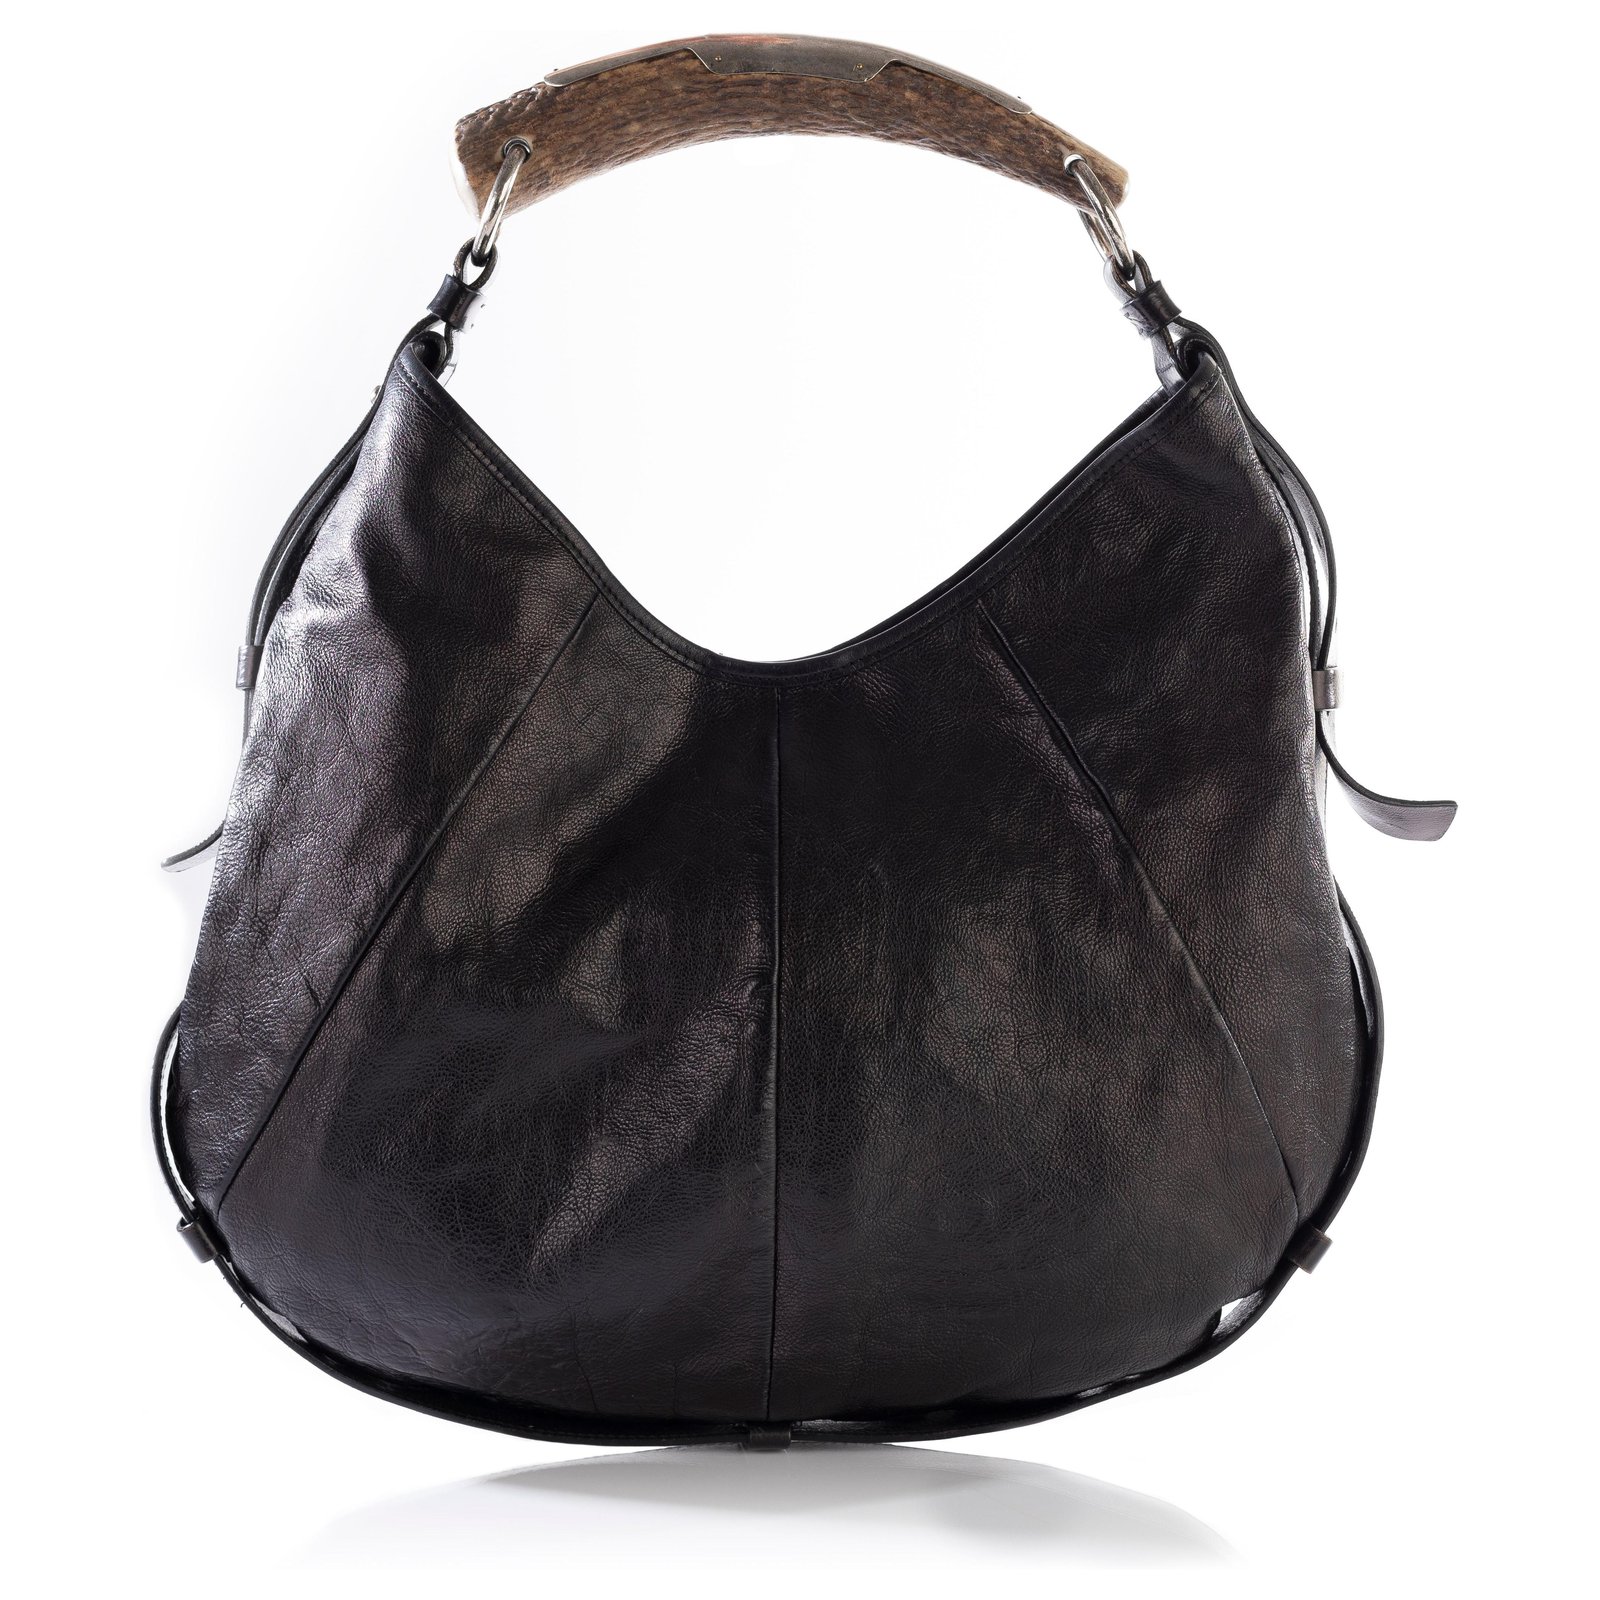 Yves Saint Laurent Mombasa Bag  Yves saint laurent, Brown leather  handbags, Leather handbags